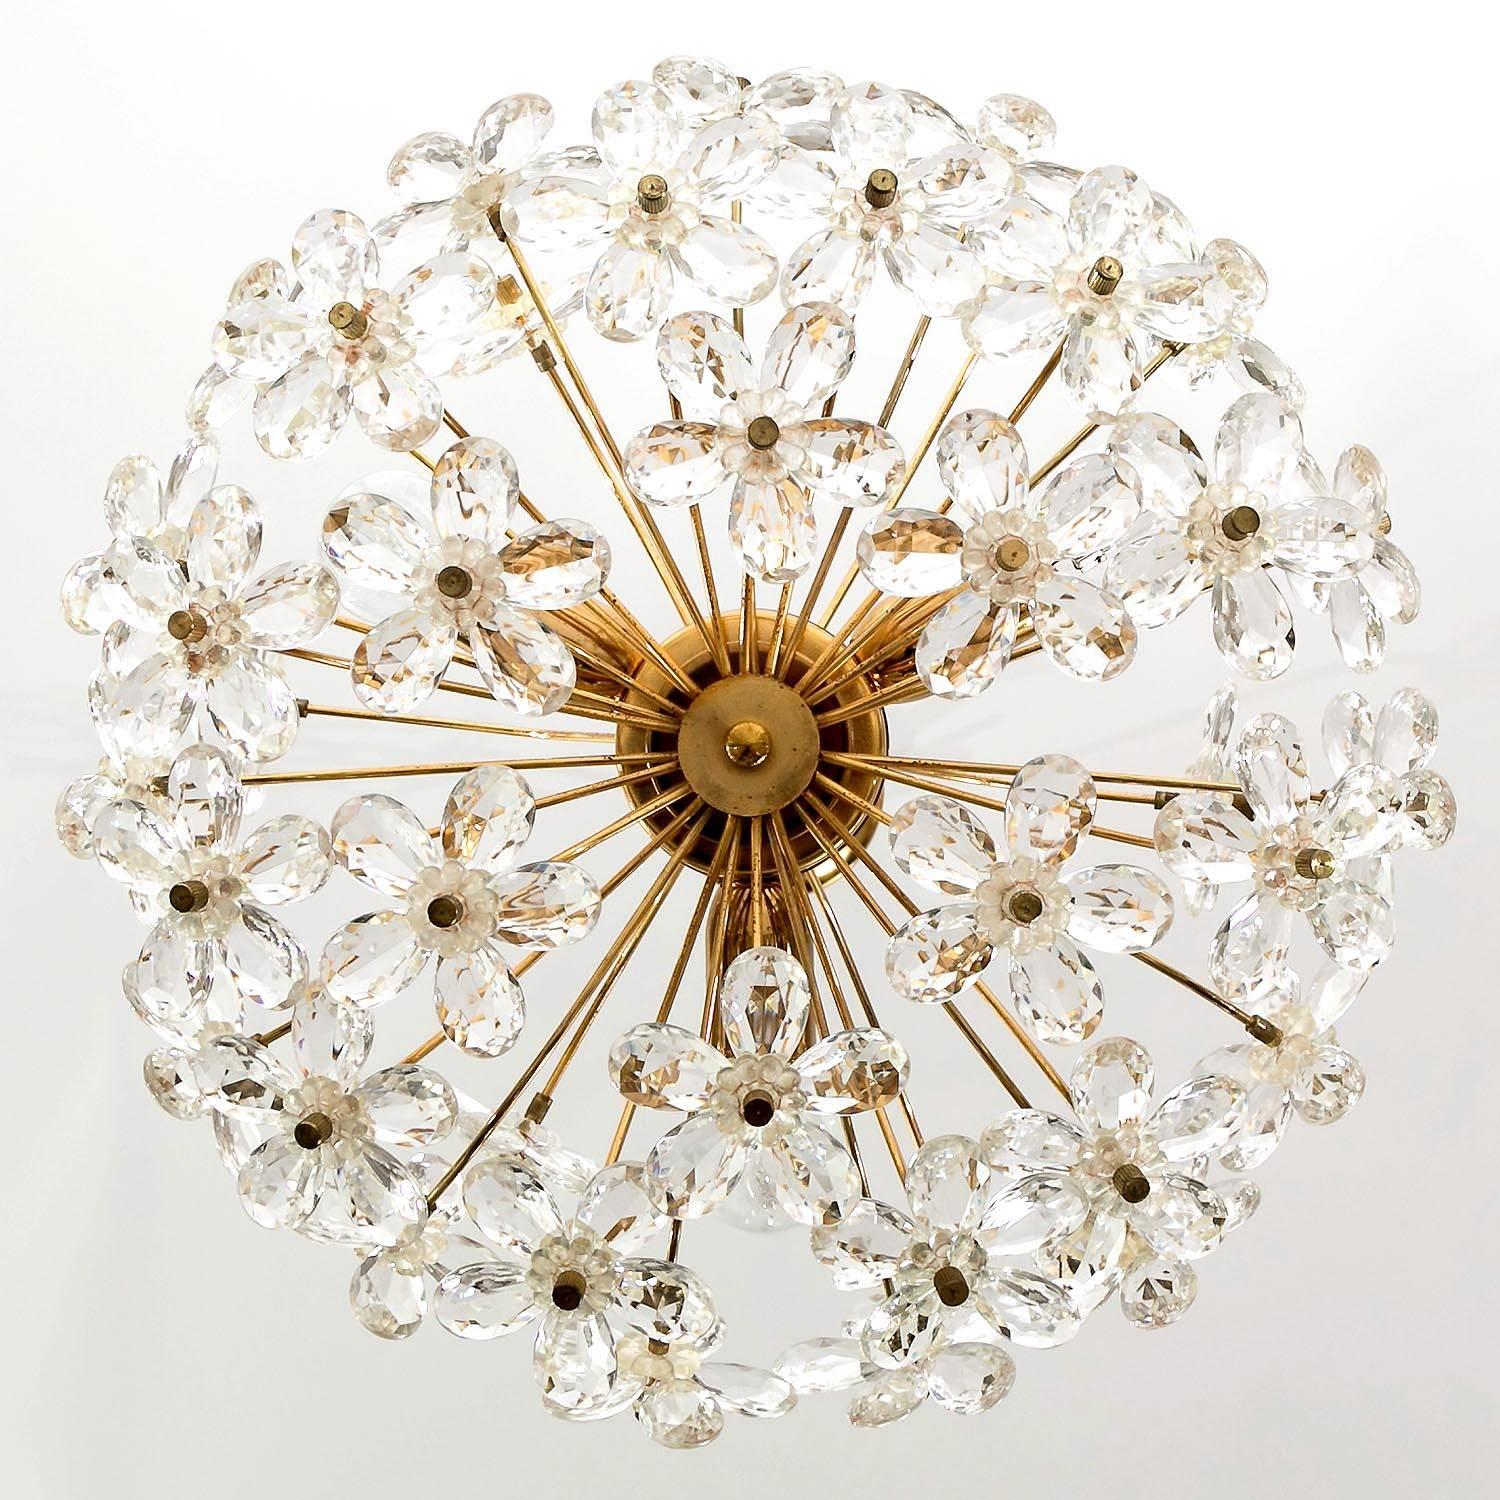 Mid-20th Century Italian Chandelier or Pendant Light, Brass Crystal Glass, 1906s